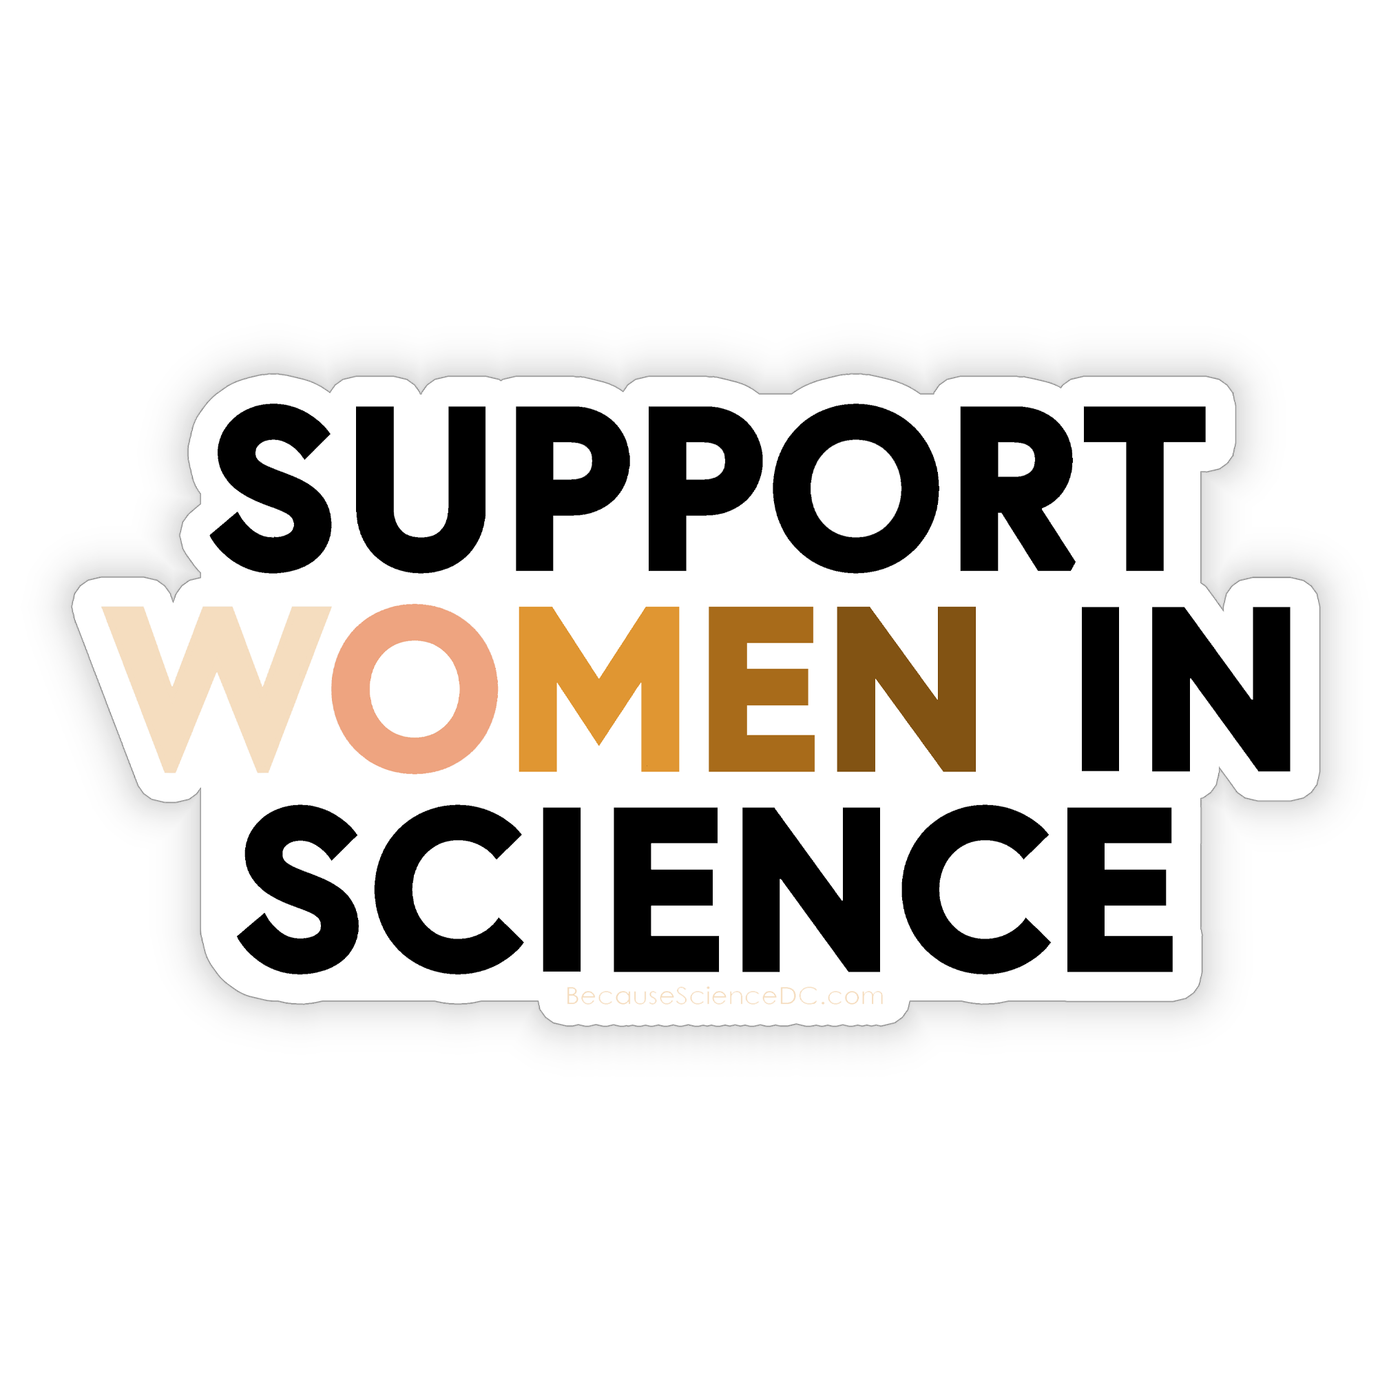 Support Women in Science - Vinyl Sticker